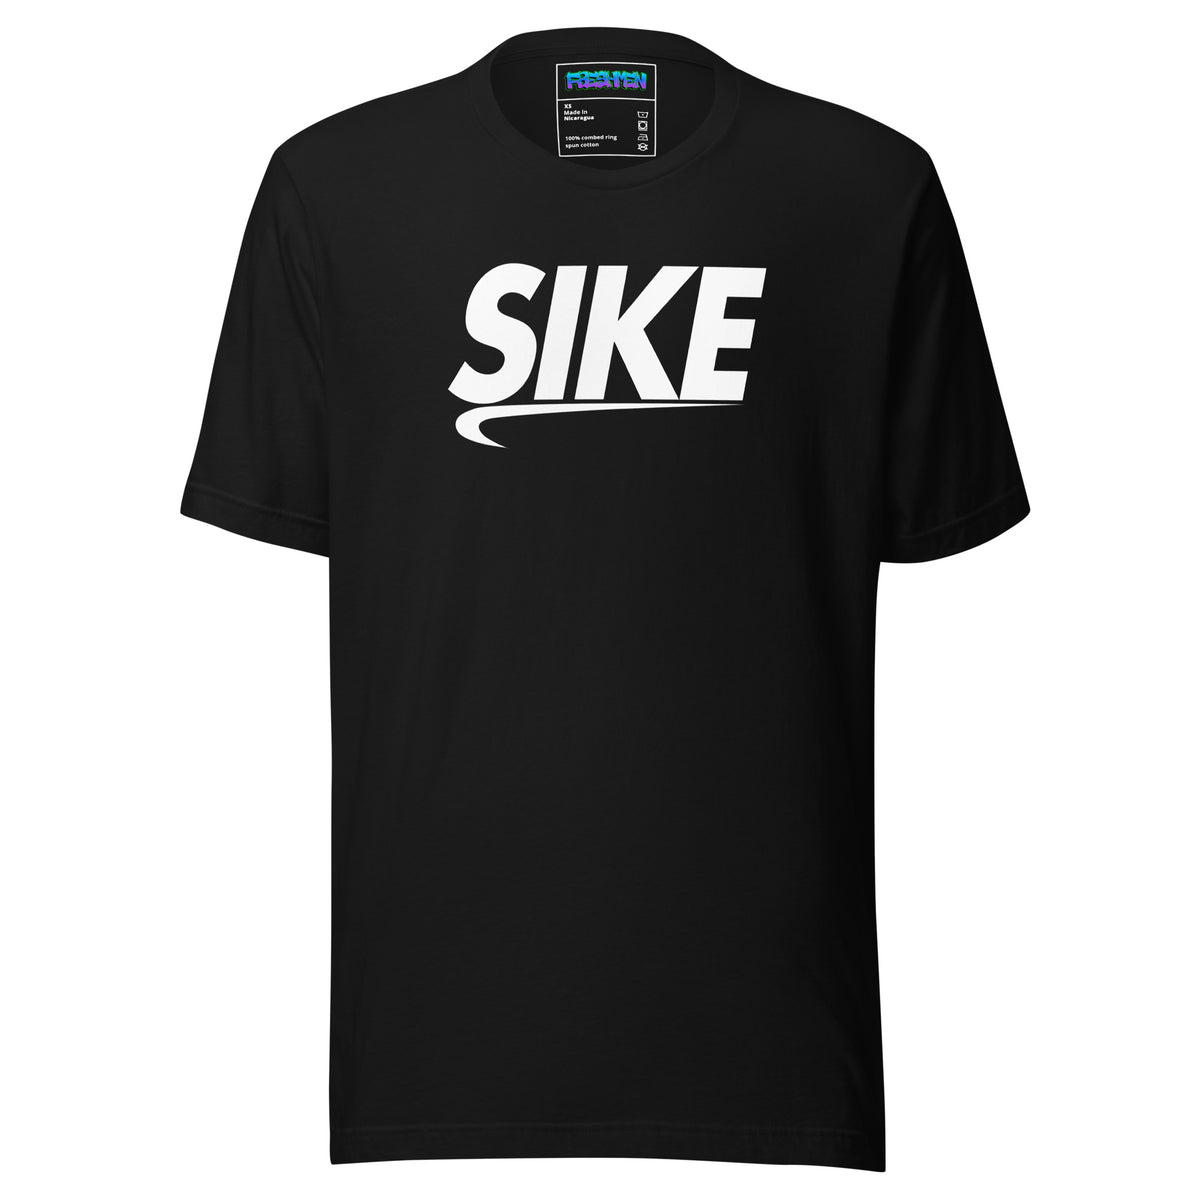 Freshmen Sike Spoof Unisex T-Shirt